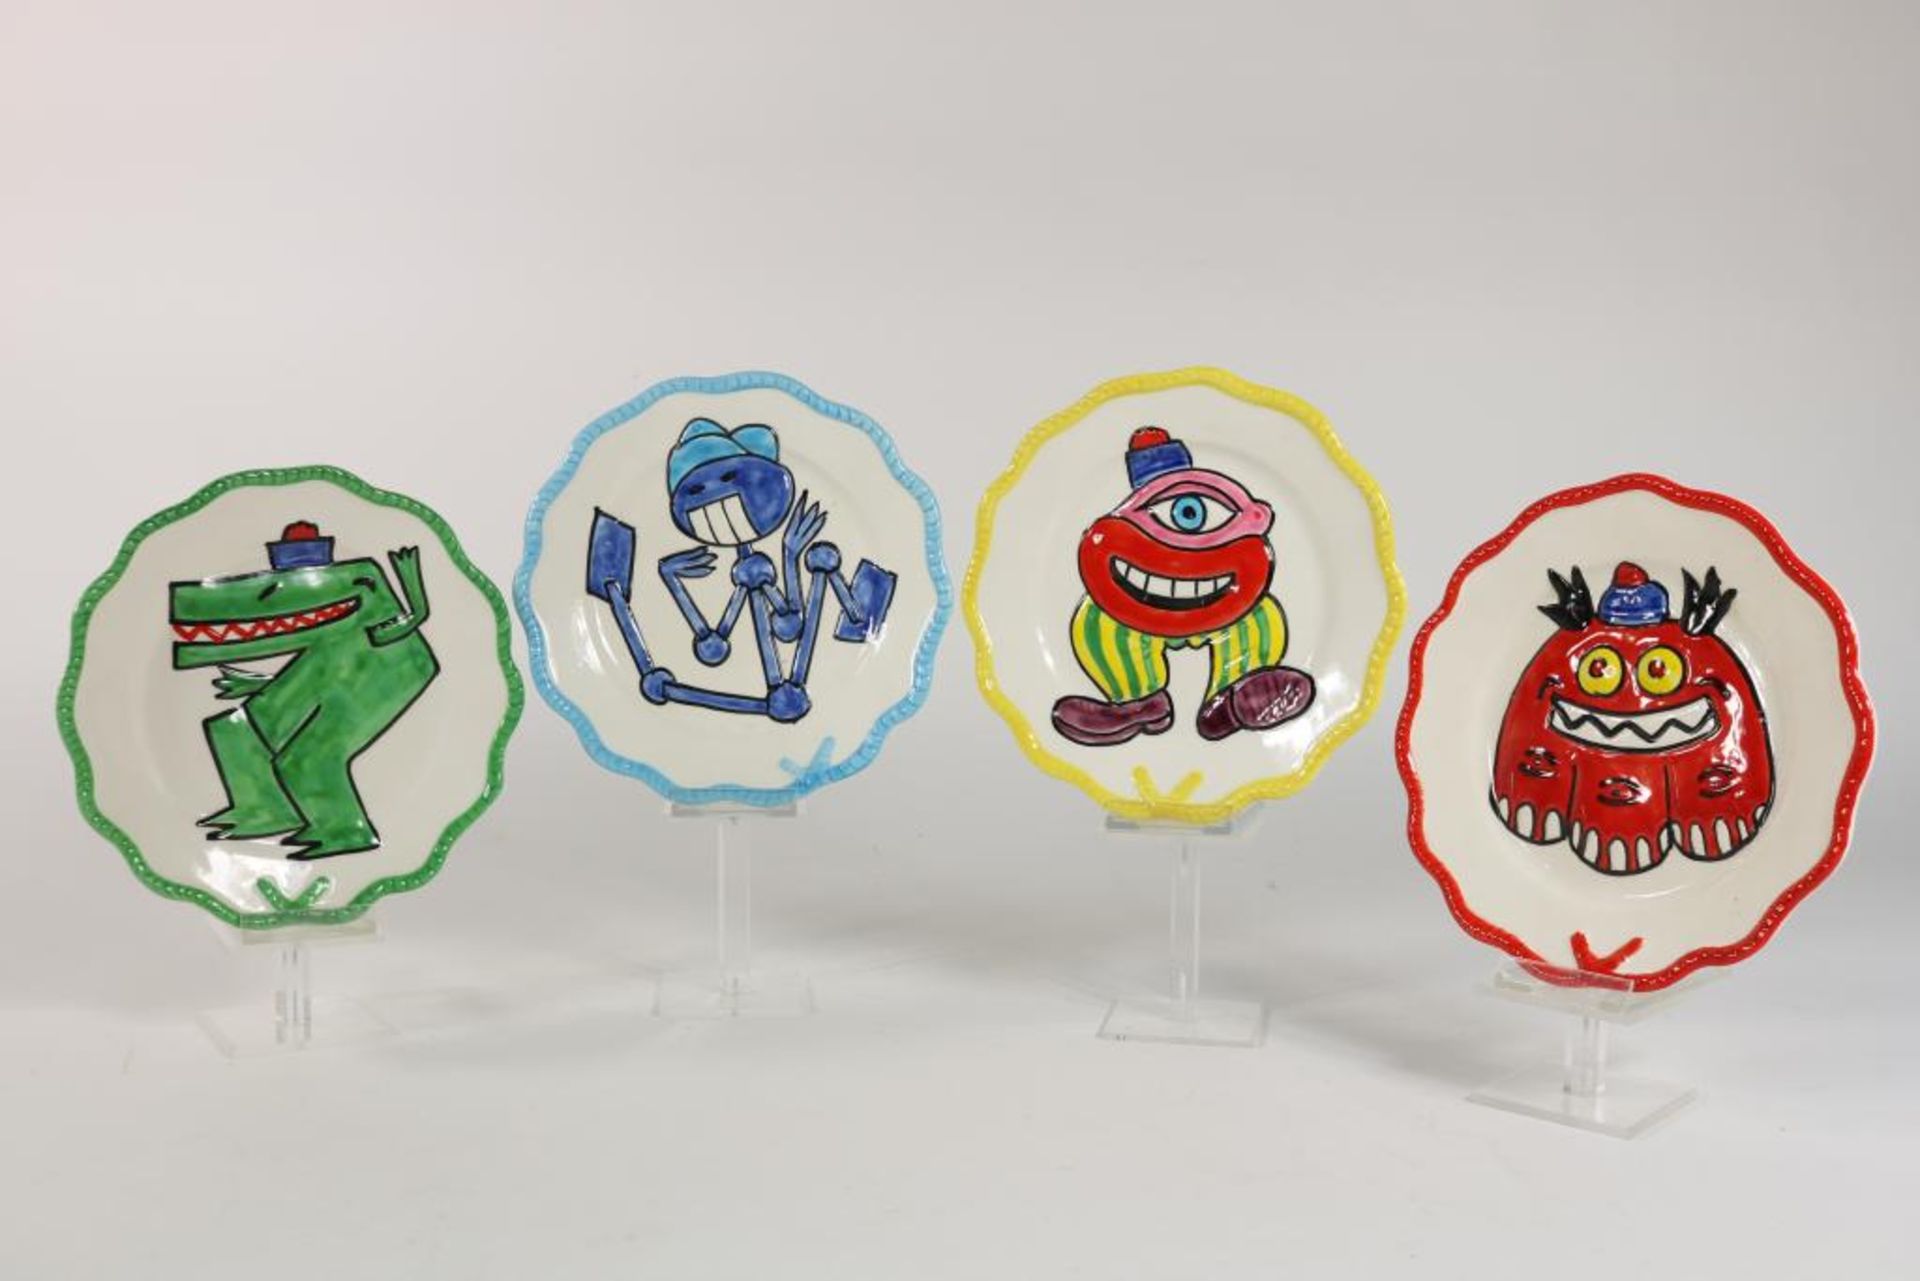 Series of 4 ceramic plates with polychrome presentation of fantasy figures, design Herve Di Rosa (